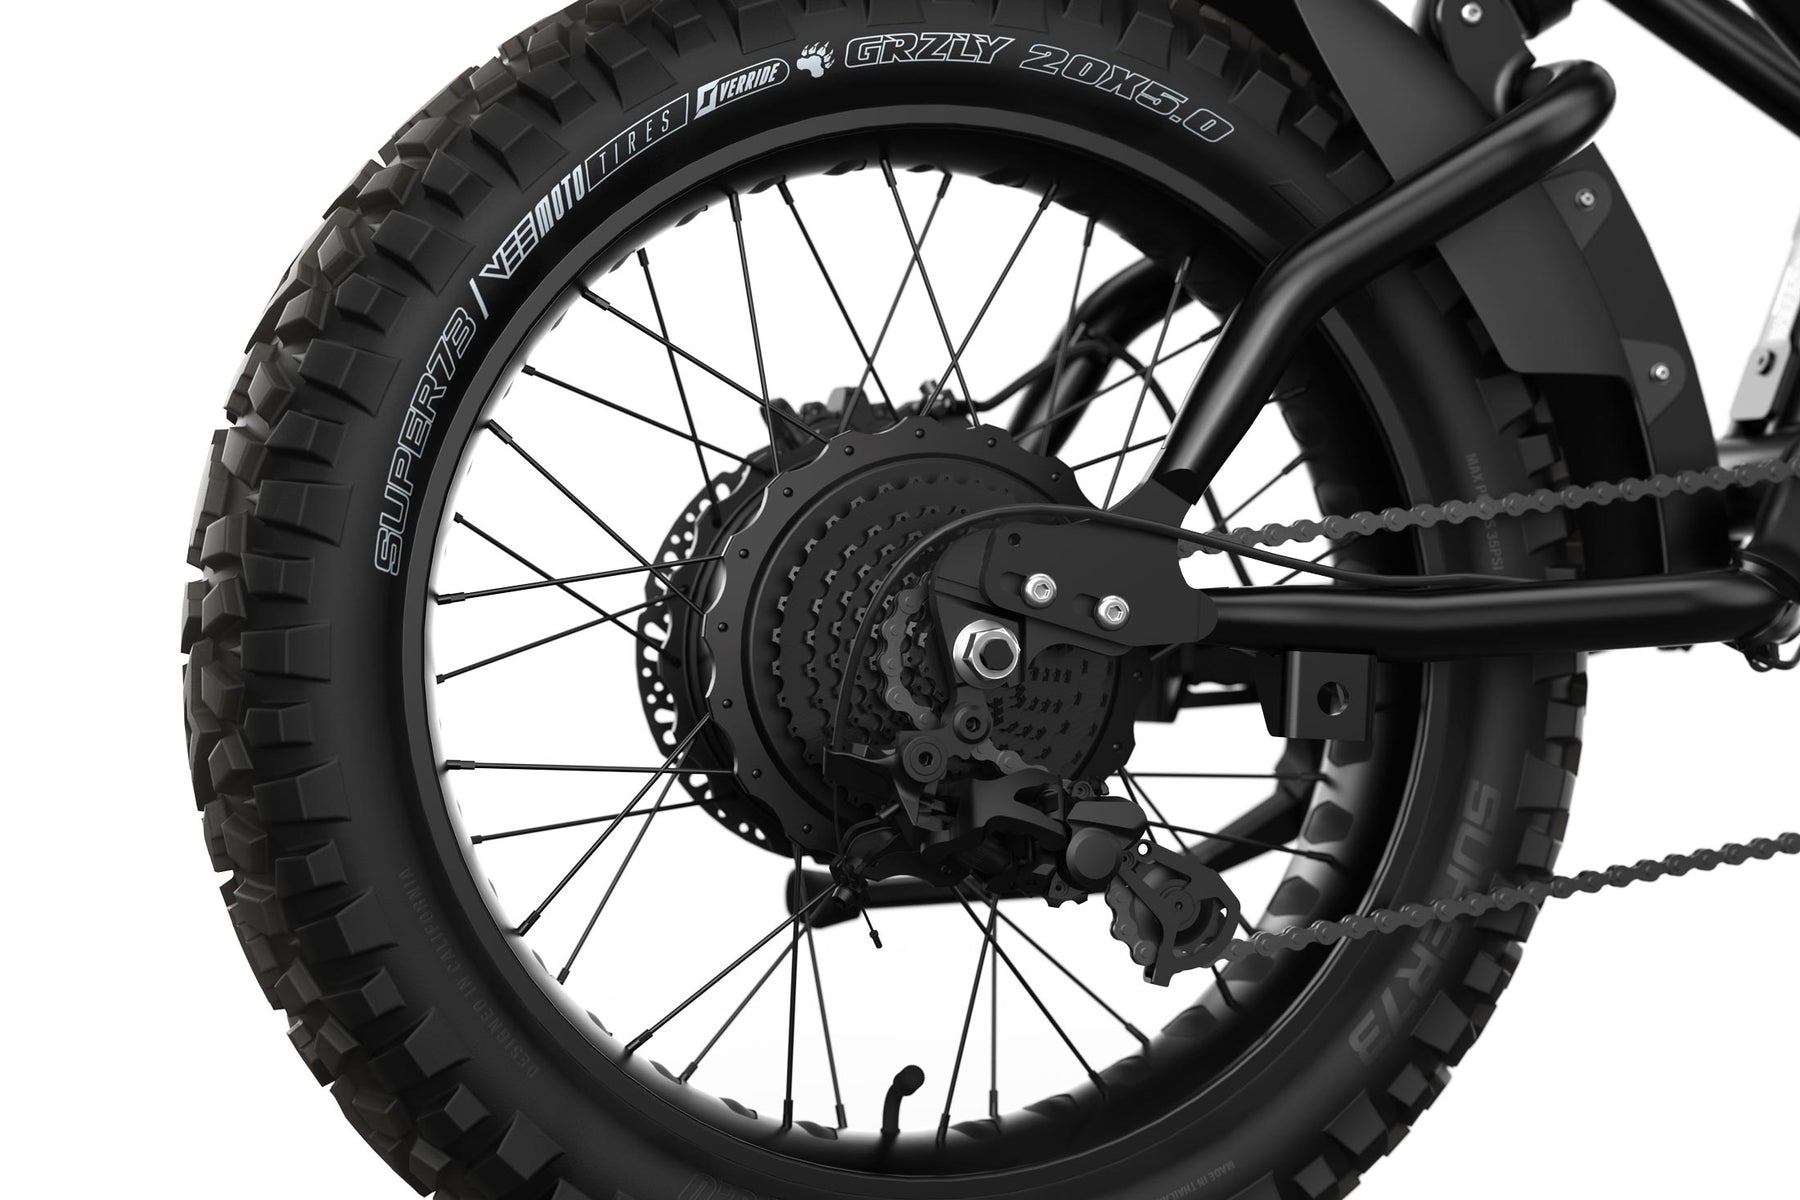 Detail shot of the rear wheel on the SUPER73-R Blackout SE bike.